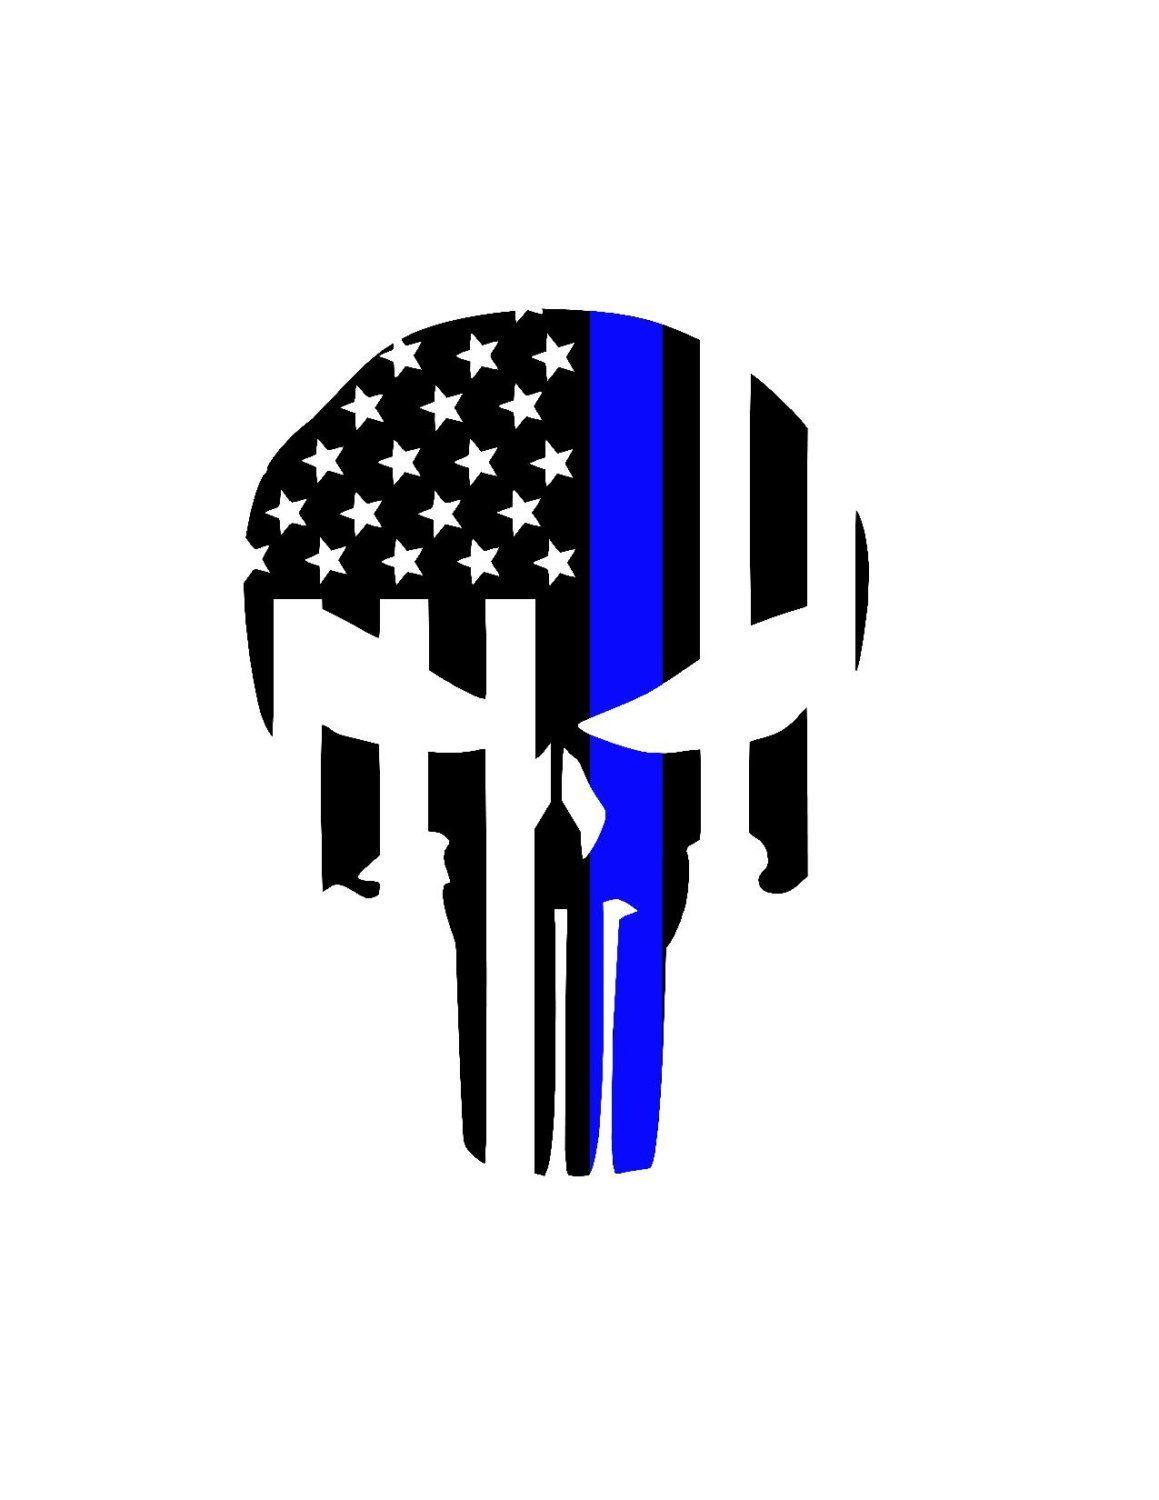 Red White Blue Punisher Logo - Punisher Skull Back The Blue Police Lives Matter Decal Decal